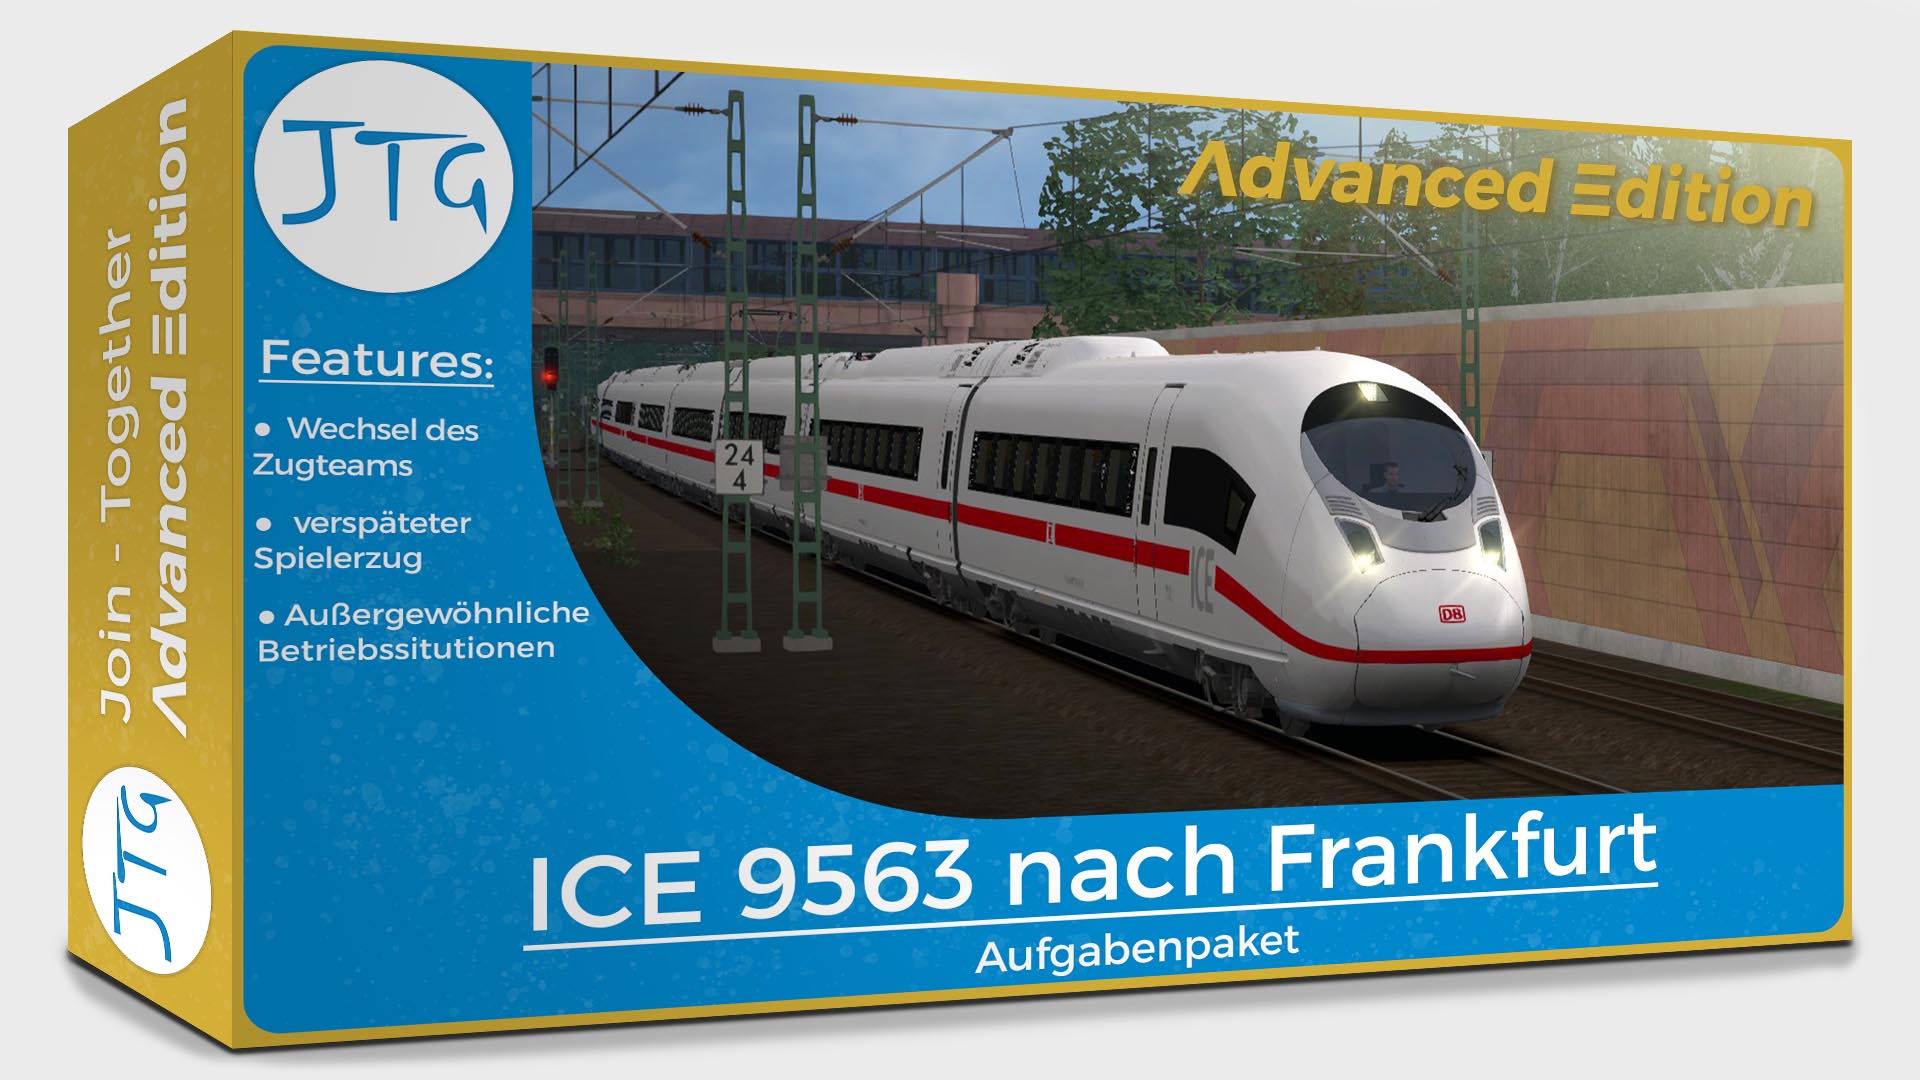 JTG Advanced Edition - ICE 9563 to Frankfurt